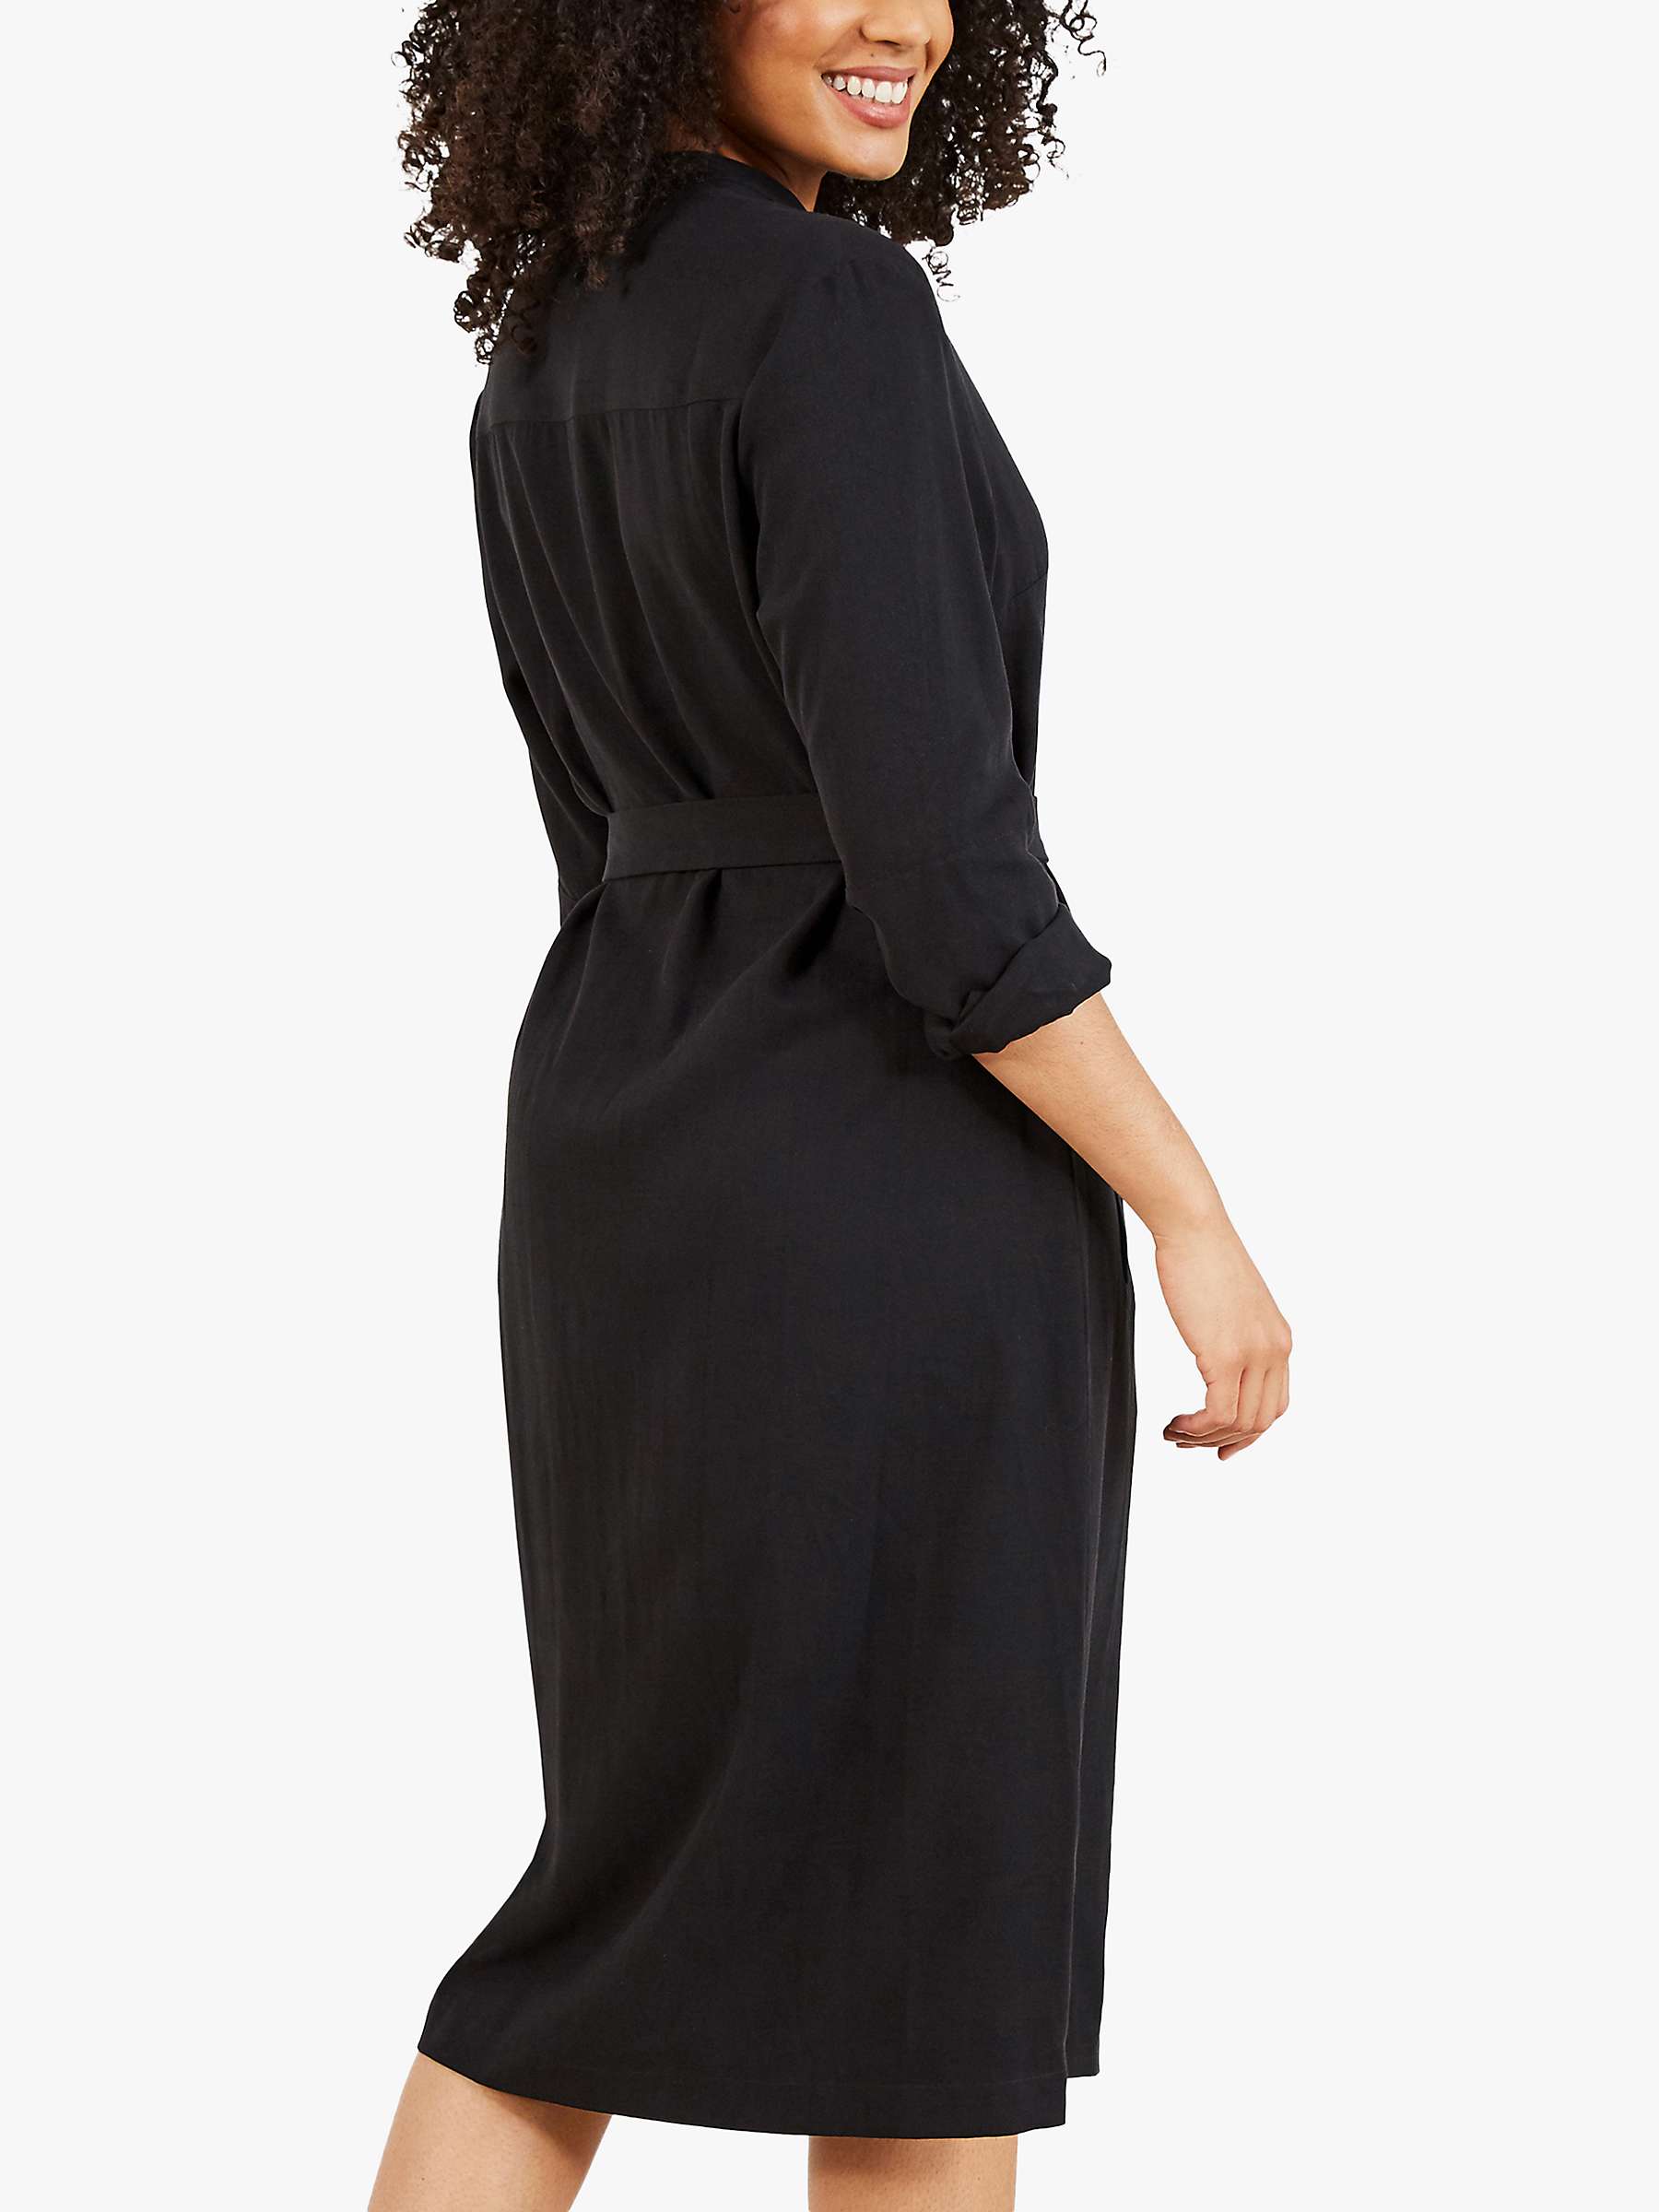 Baukjen Emory Textured Shirt Dress, Washed Black at John Lewis & Partners